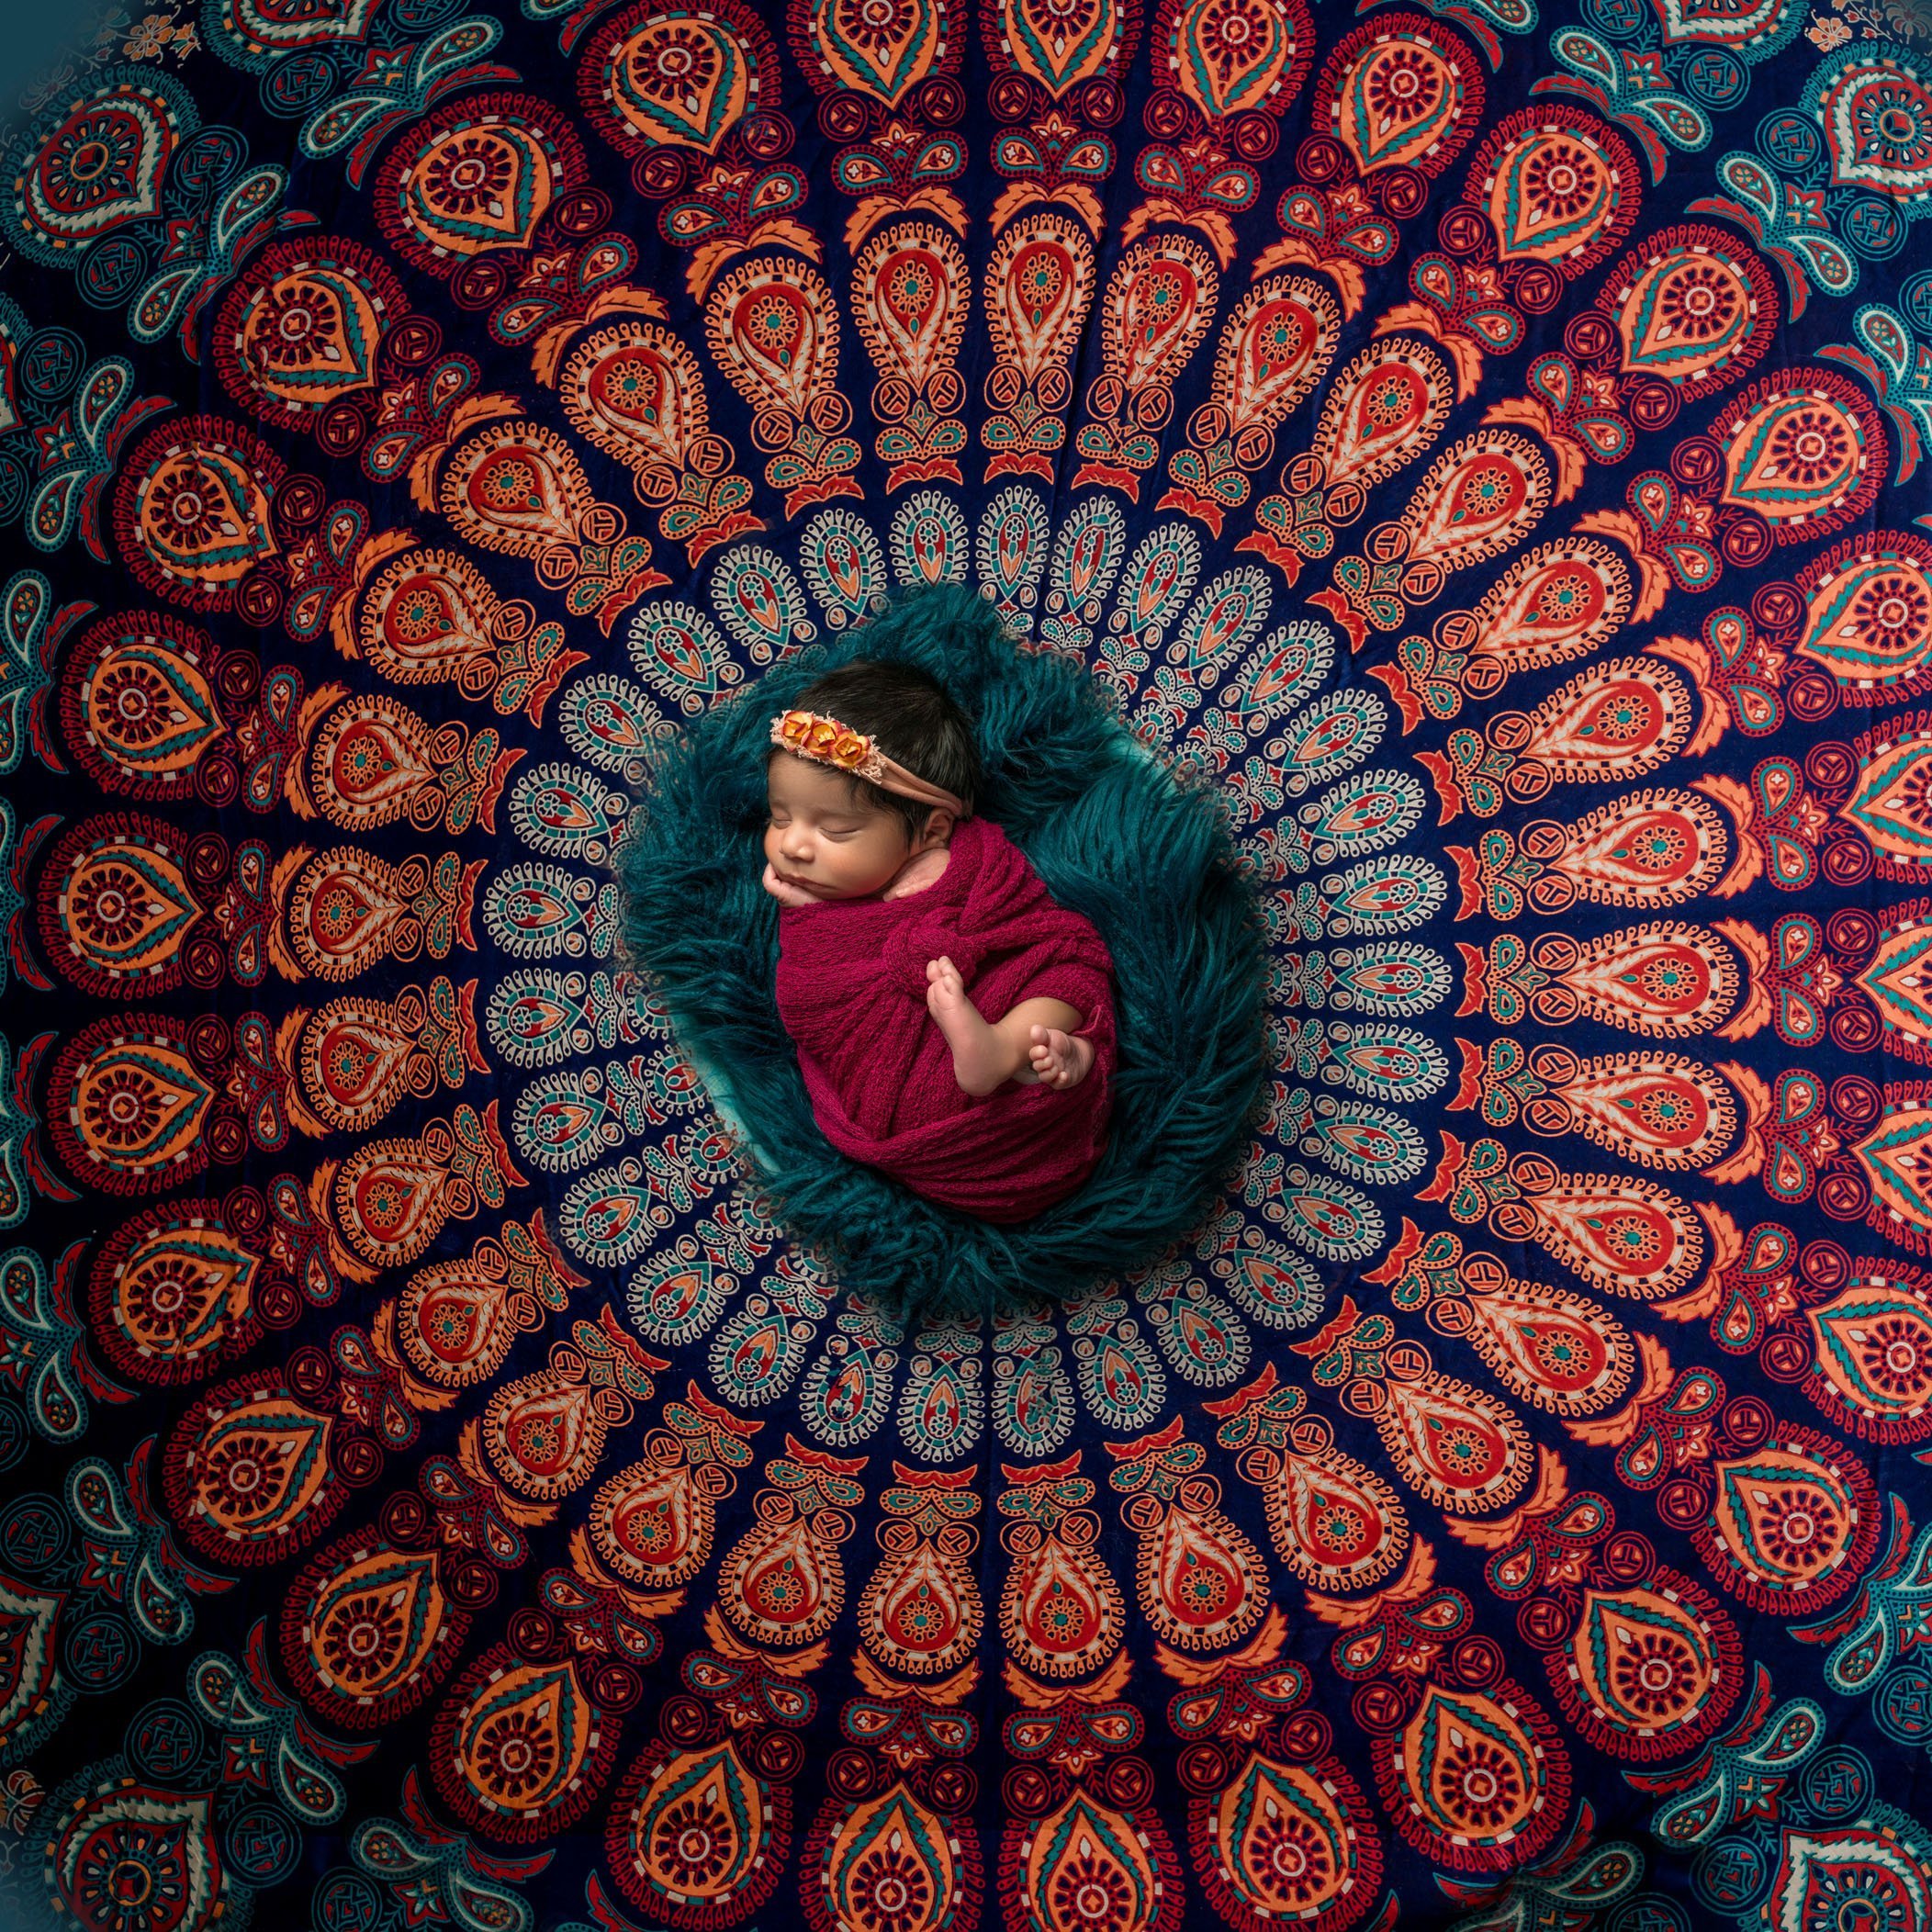 newborn baby sleeping in indian spiral tapestry